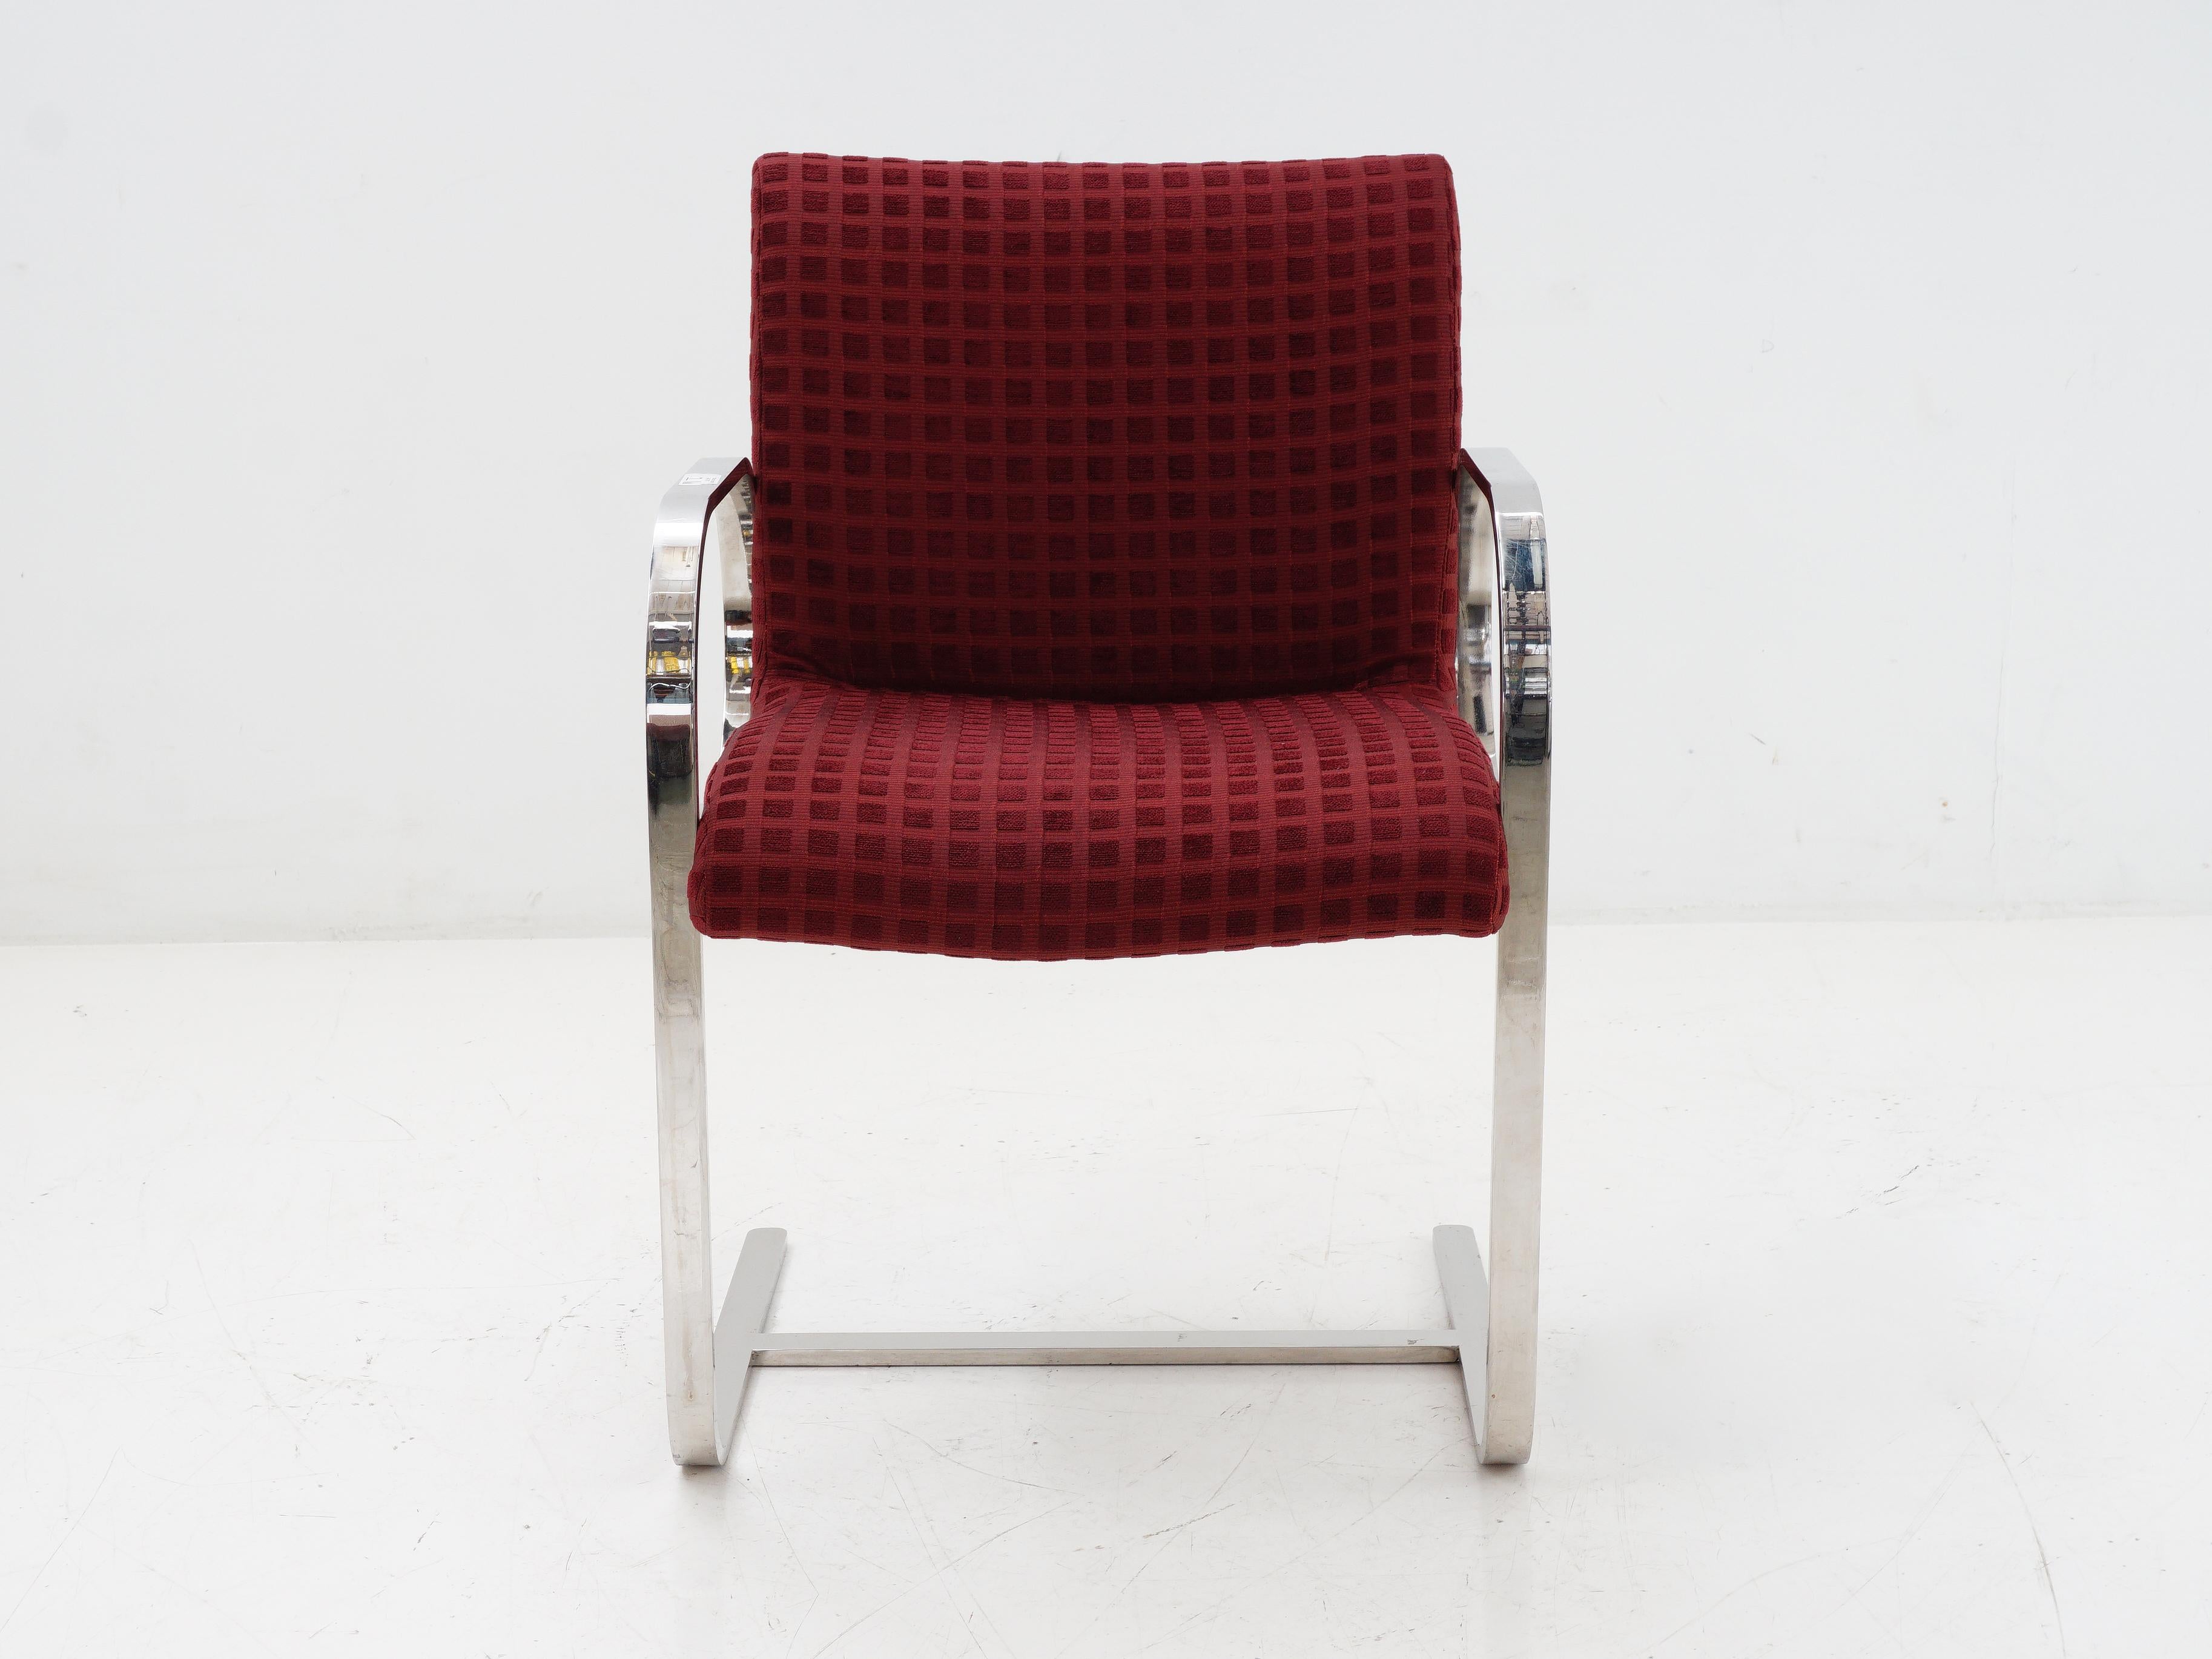 Freitragender Chrom-Flatbar-Stuhl, 1970er-Jahre (Ende des 20. Jahrhunderts)